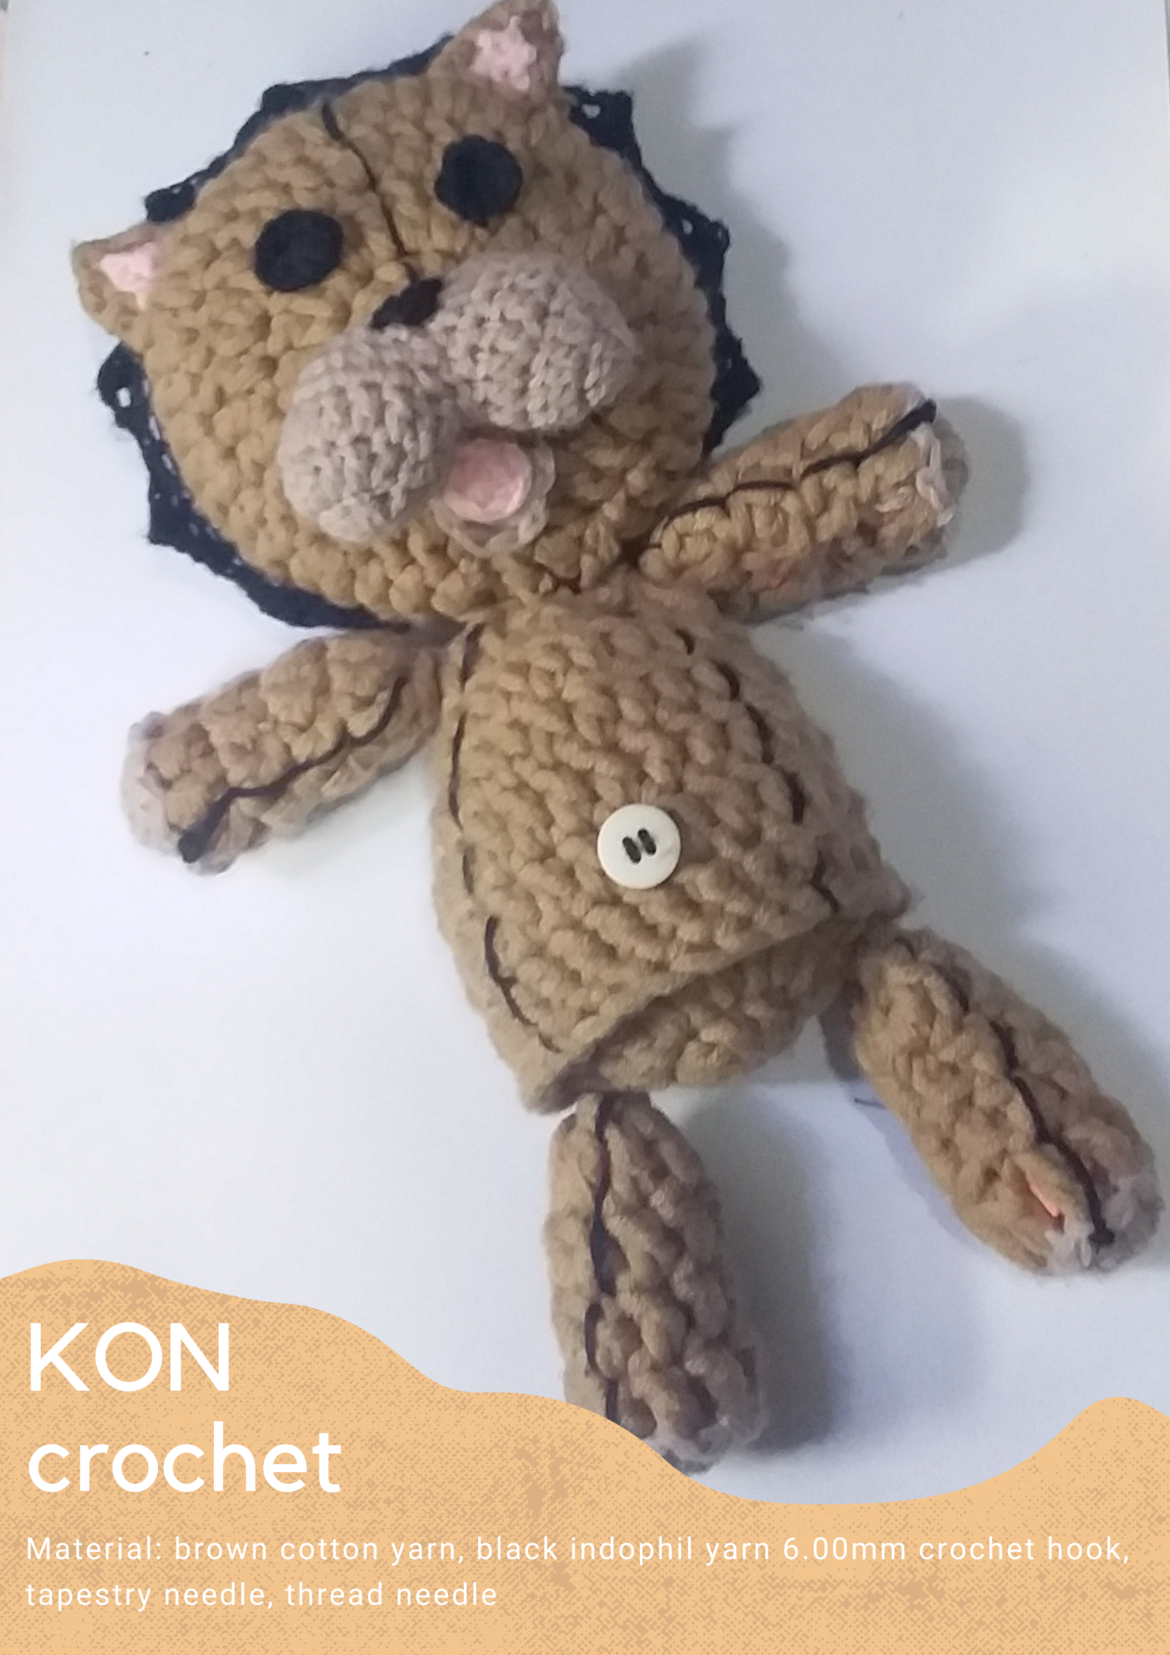 KON from Bleach crochet